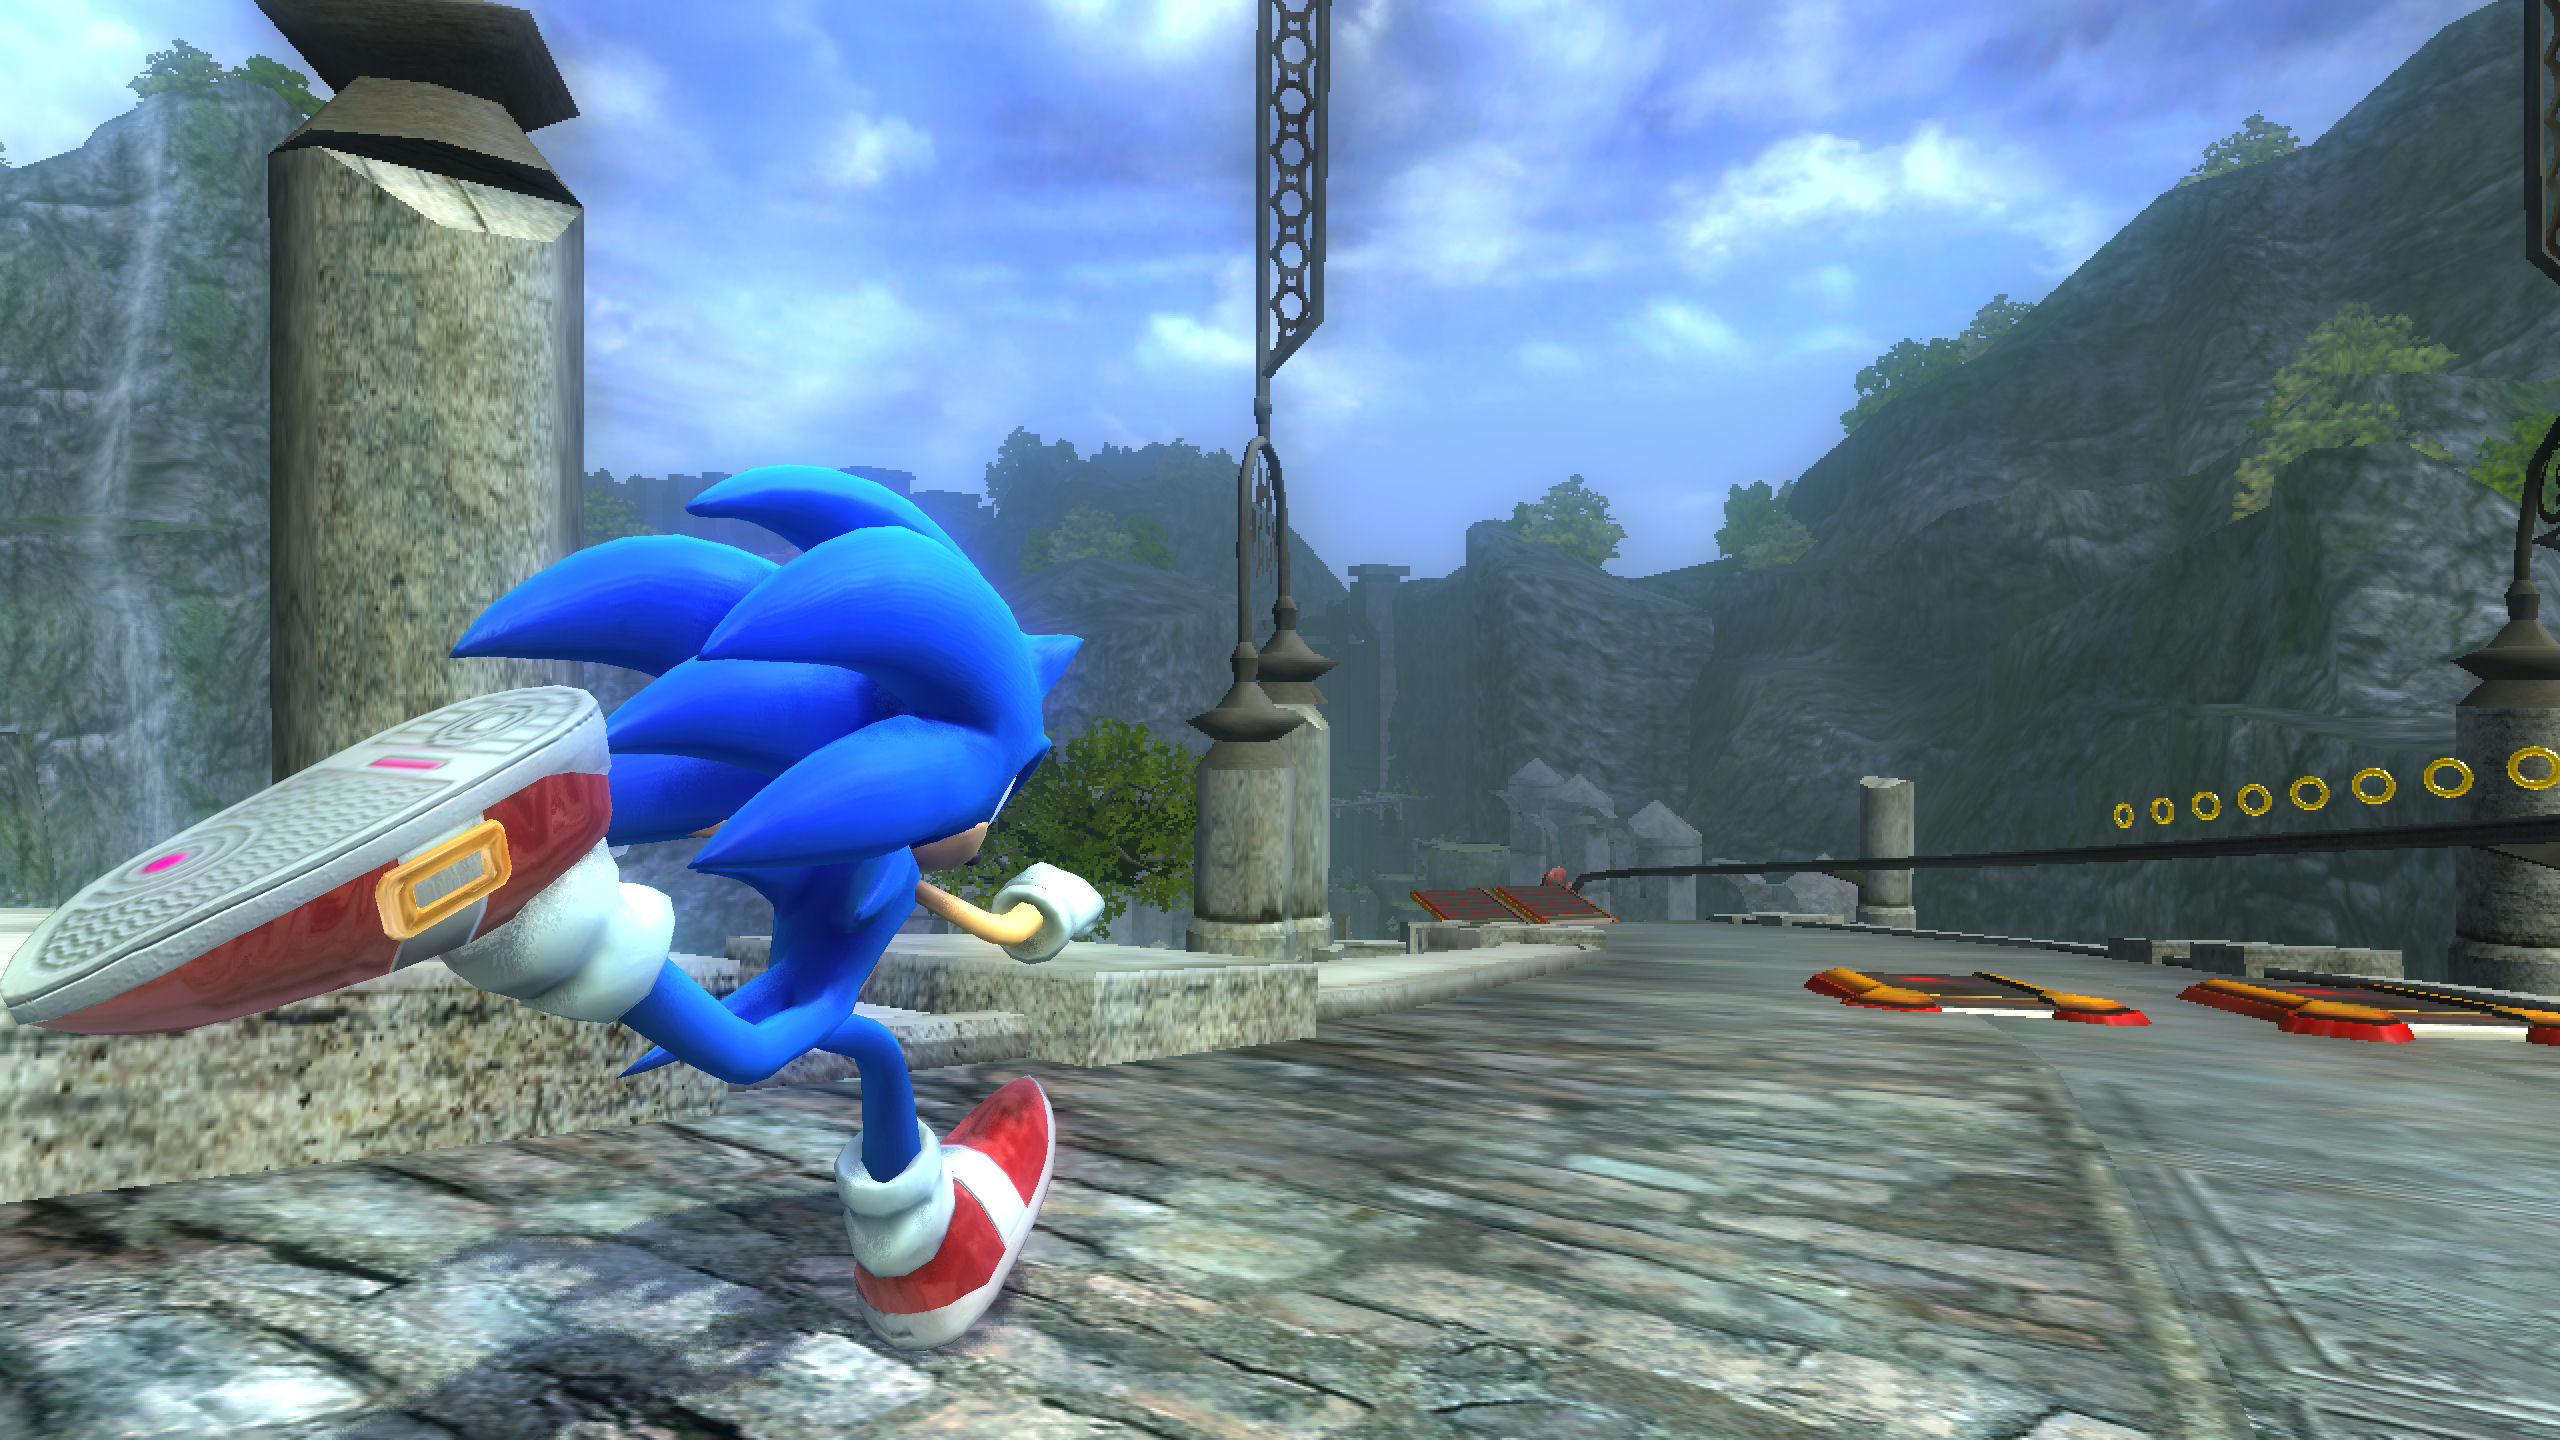 06 demo. Sonic the Hedgehog (игра, 2006). Соник 2006. Sonic 2006 игра. Соник 06.